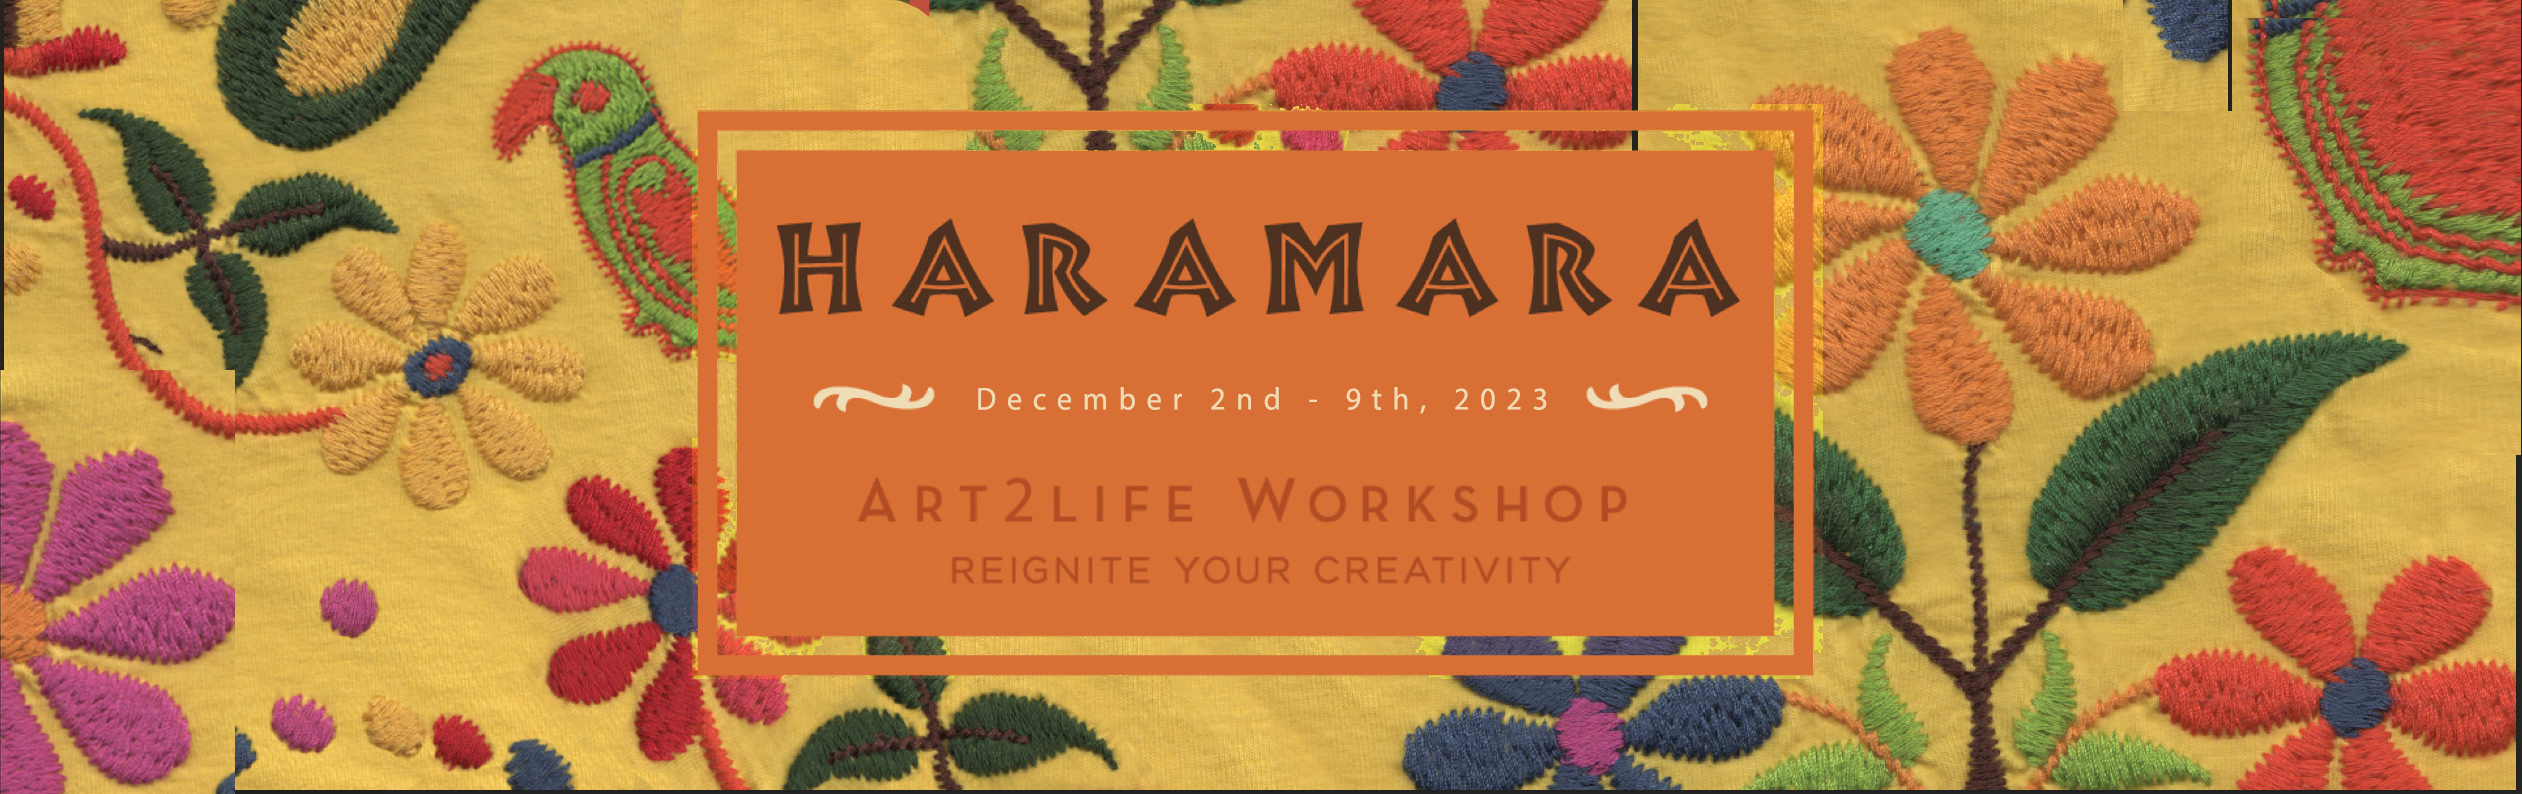 Haramara website banner 2023